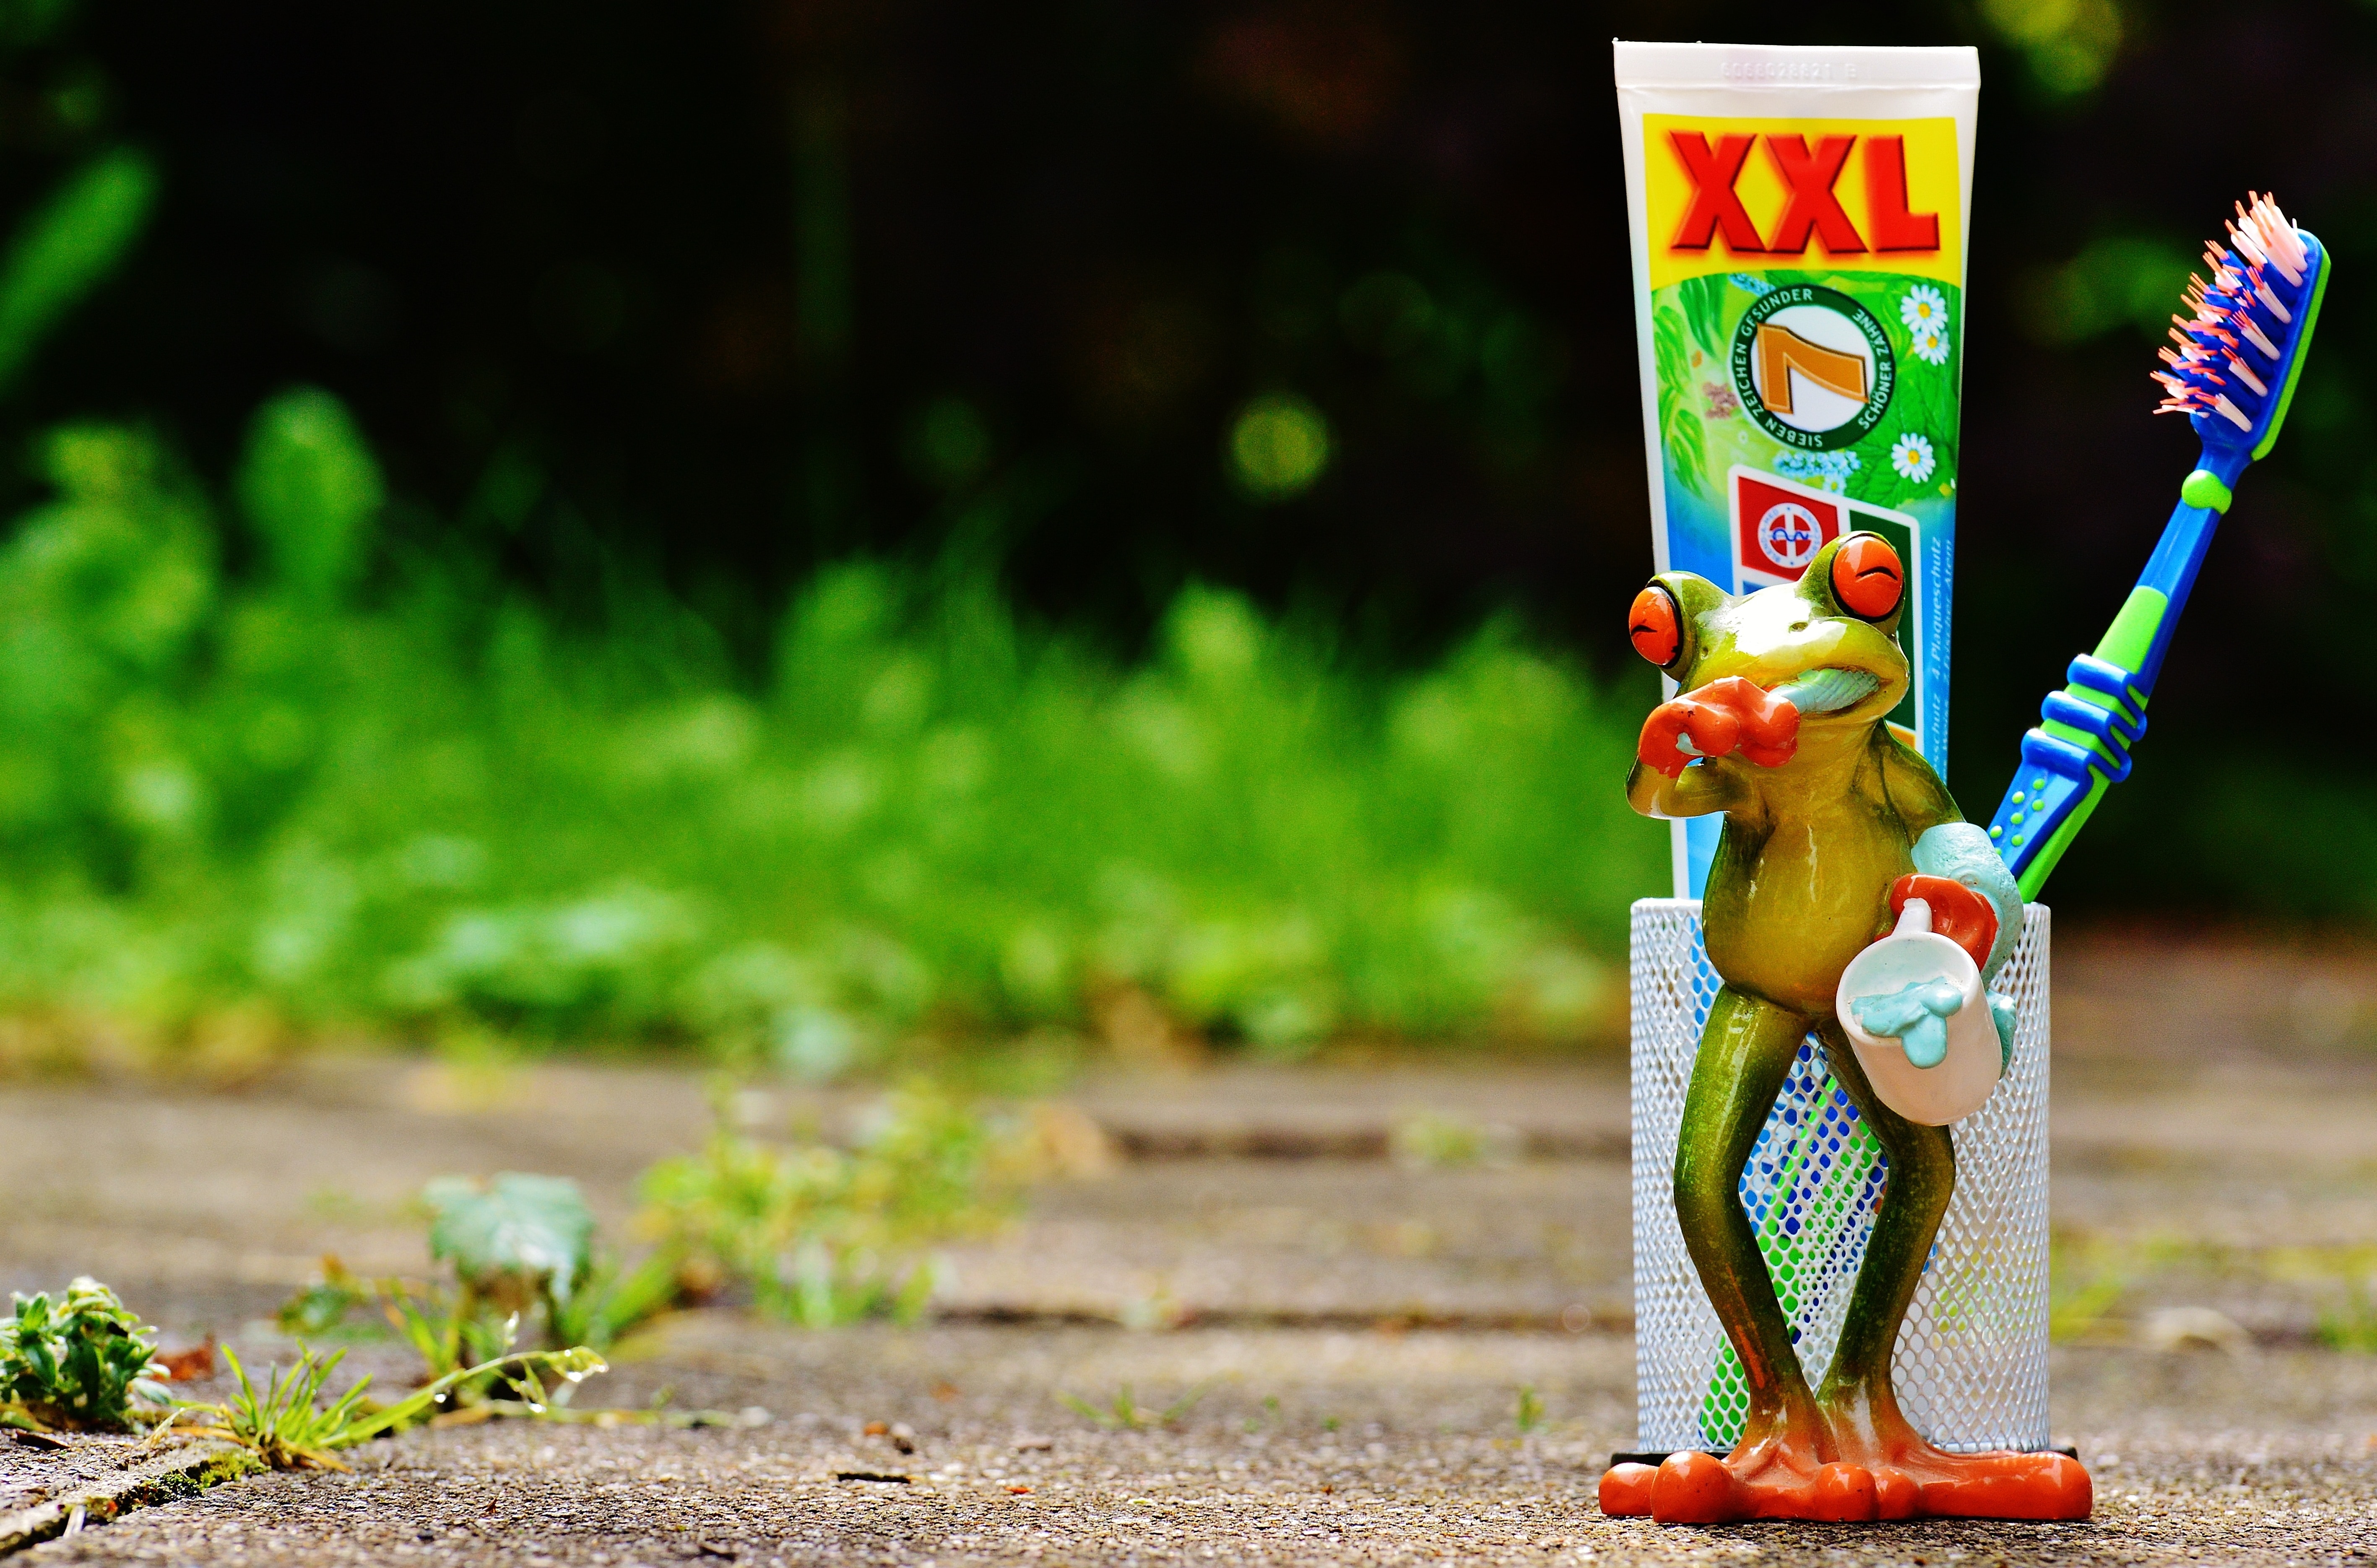 xxl frog plastic toy